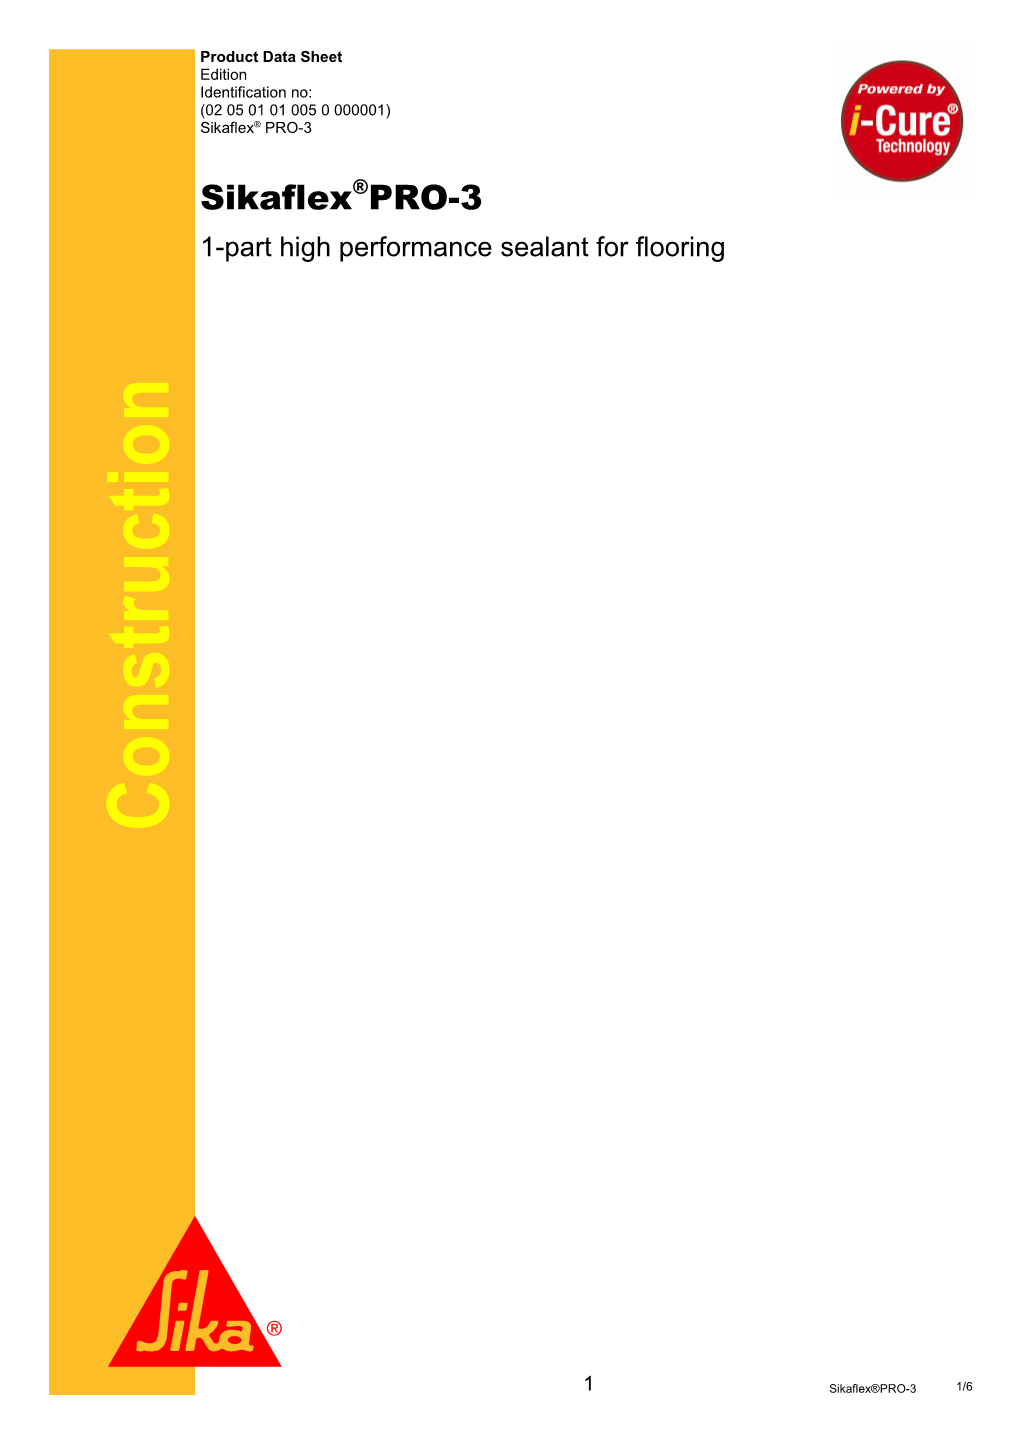 1-Part High Performance Sealant for Flooring